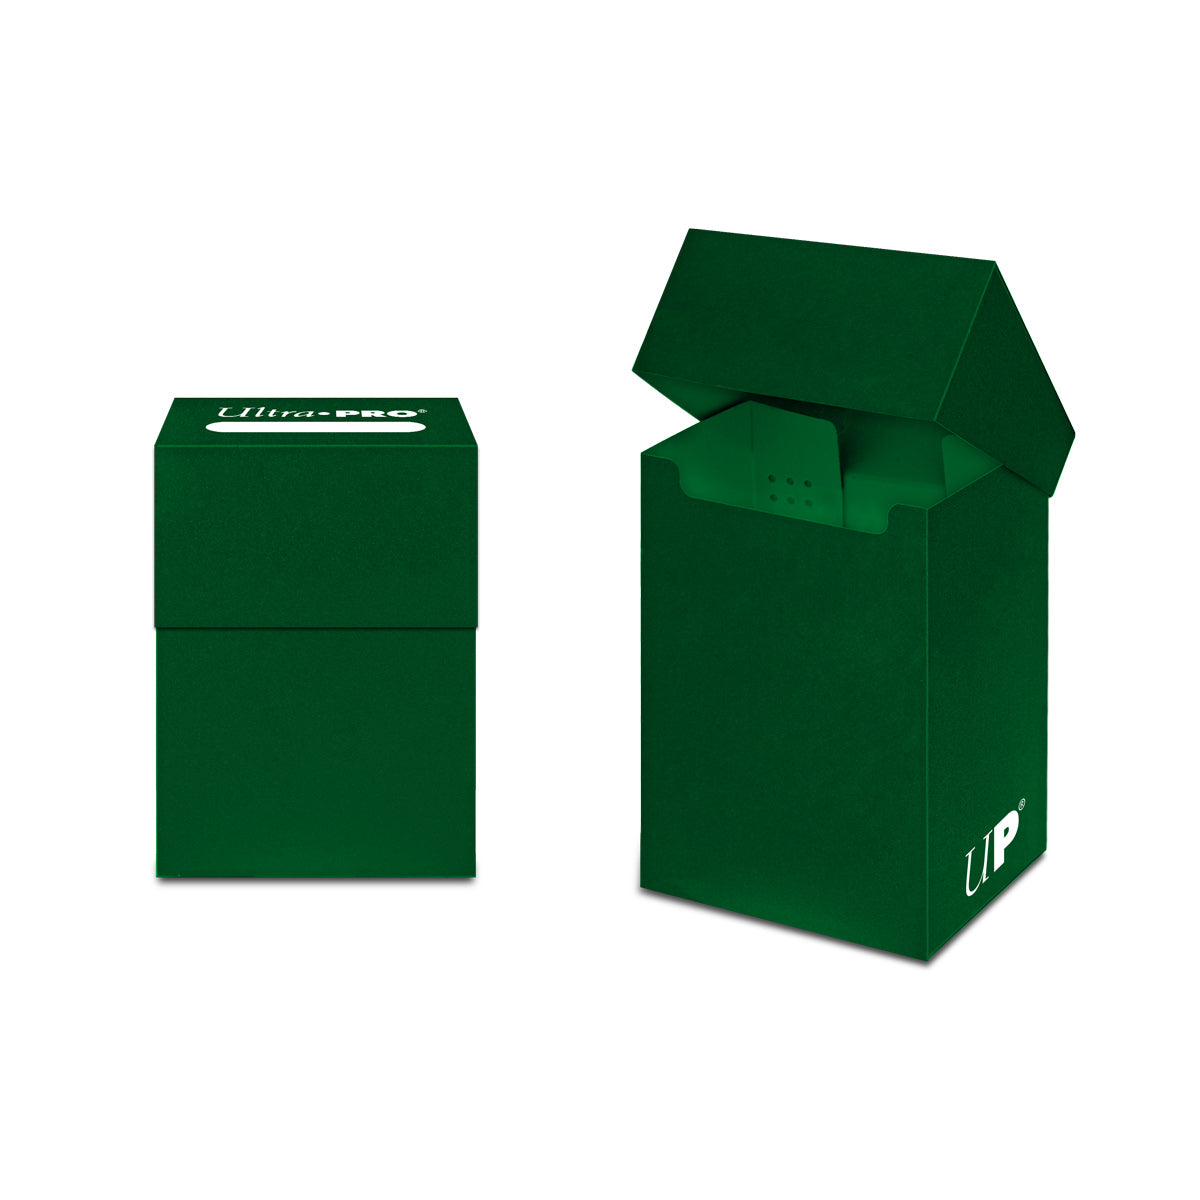 Ultra-Pro Forest Green Deck Box